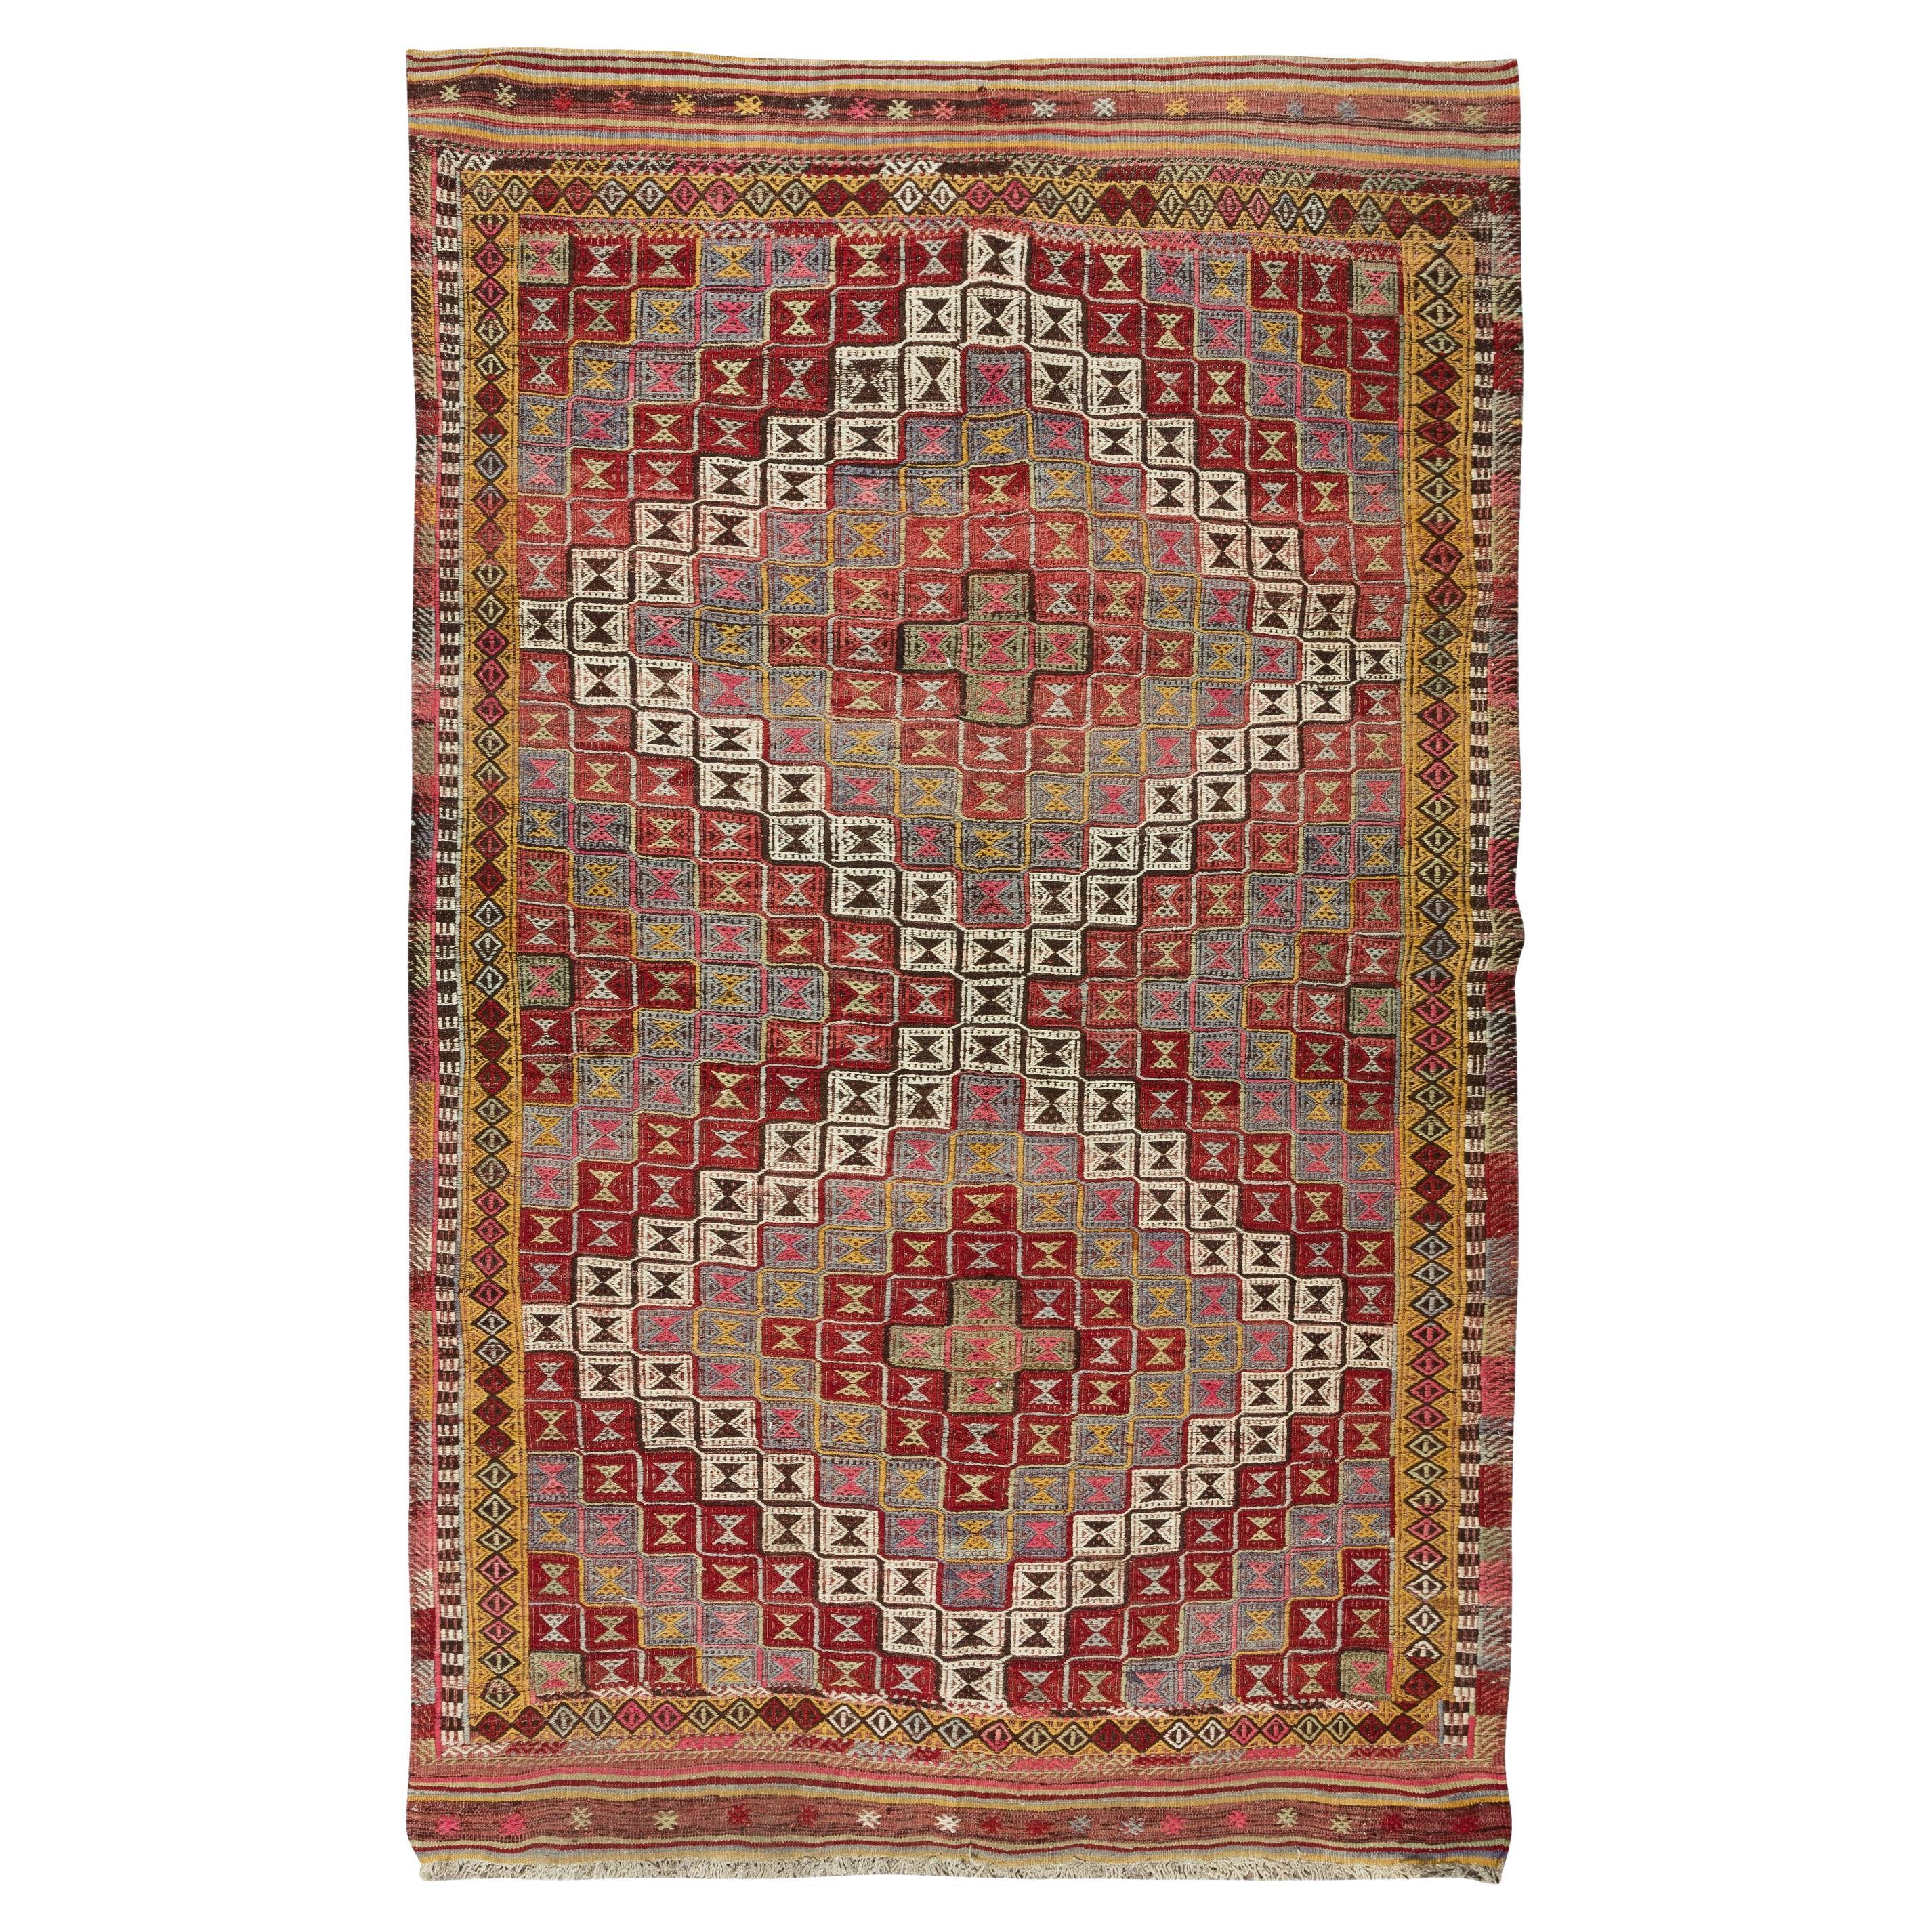 5.3x8.3 Ft One-of-a-Kind Geometric Vintage Turkish Jijim Kilim Rug Made of Wool